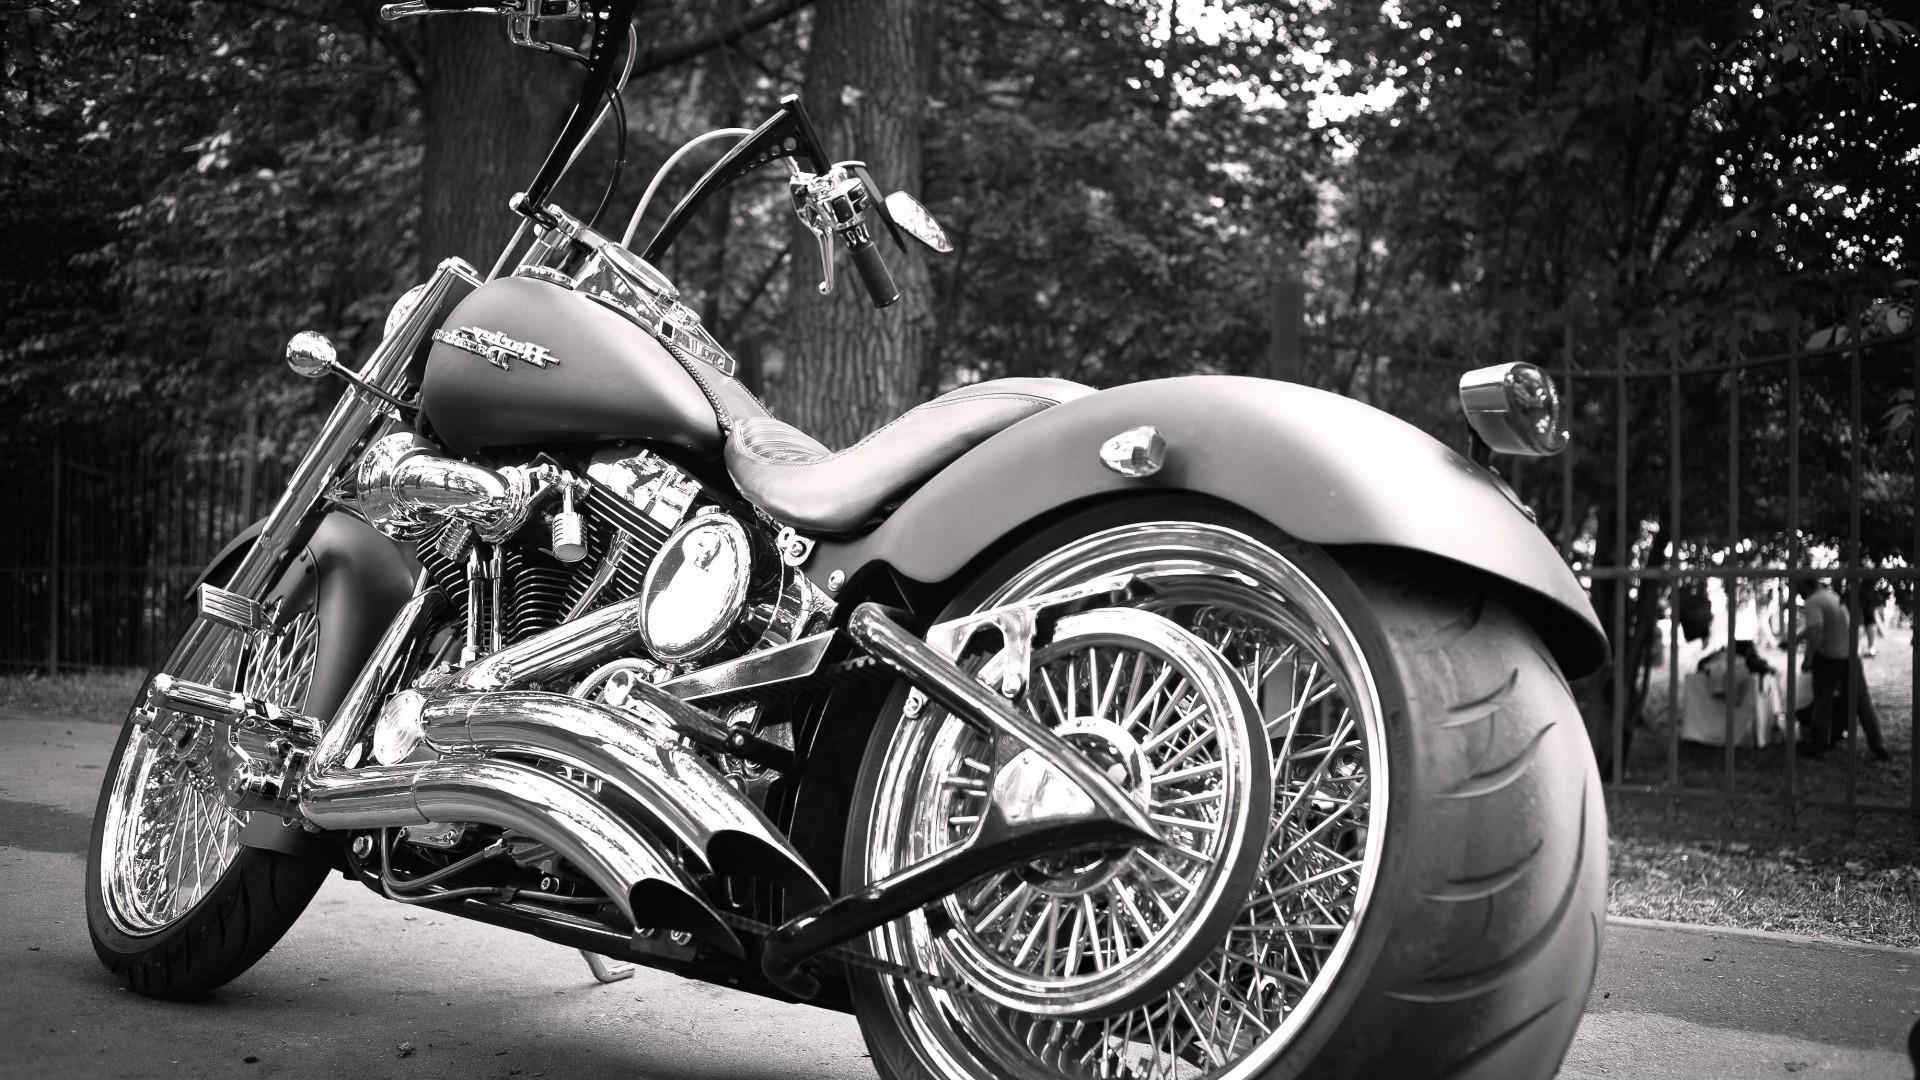 Harley Davidson Classic HD Davidson Bike Wallpaper